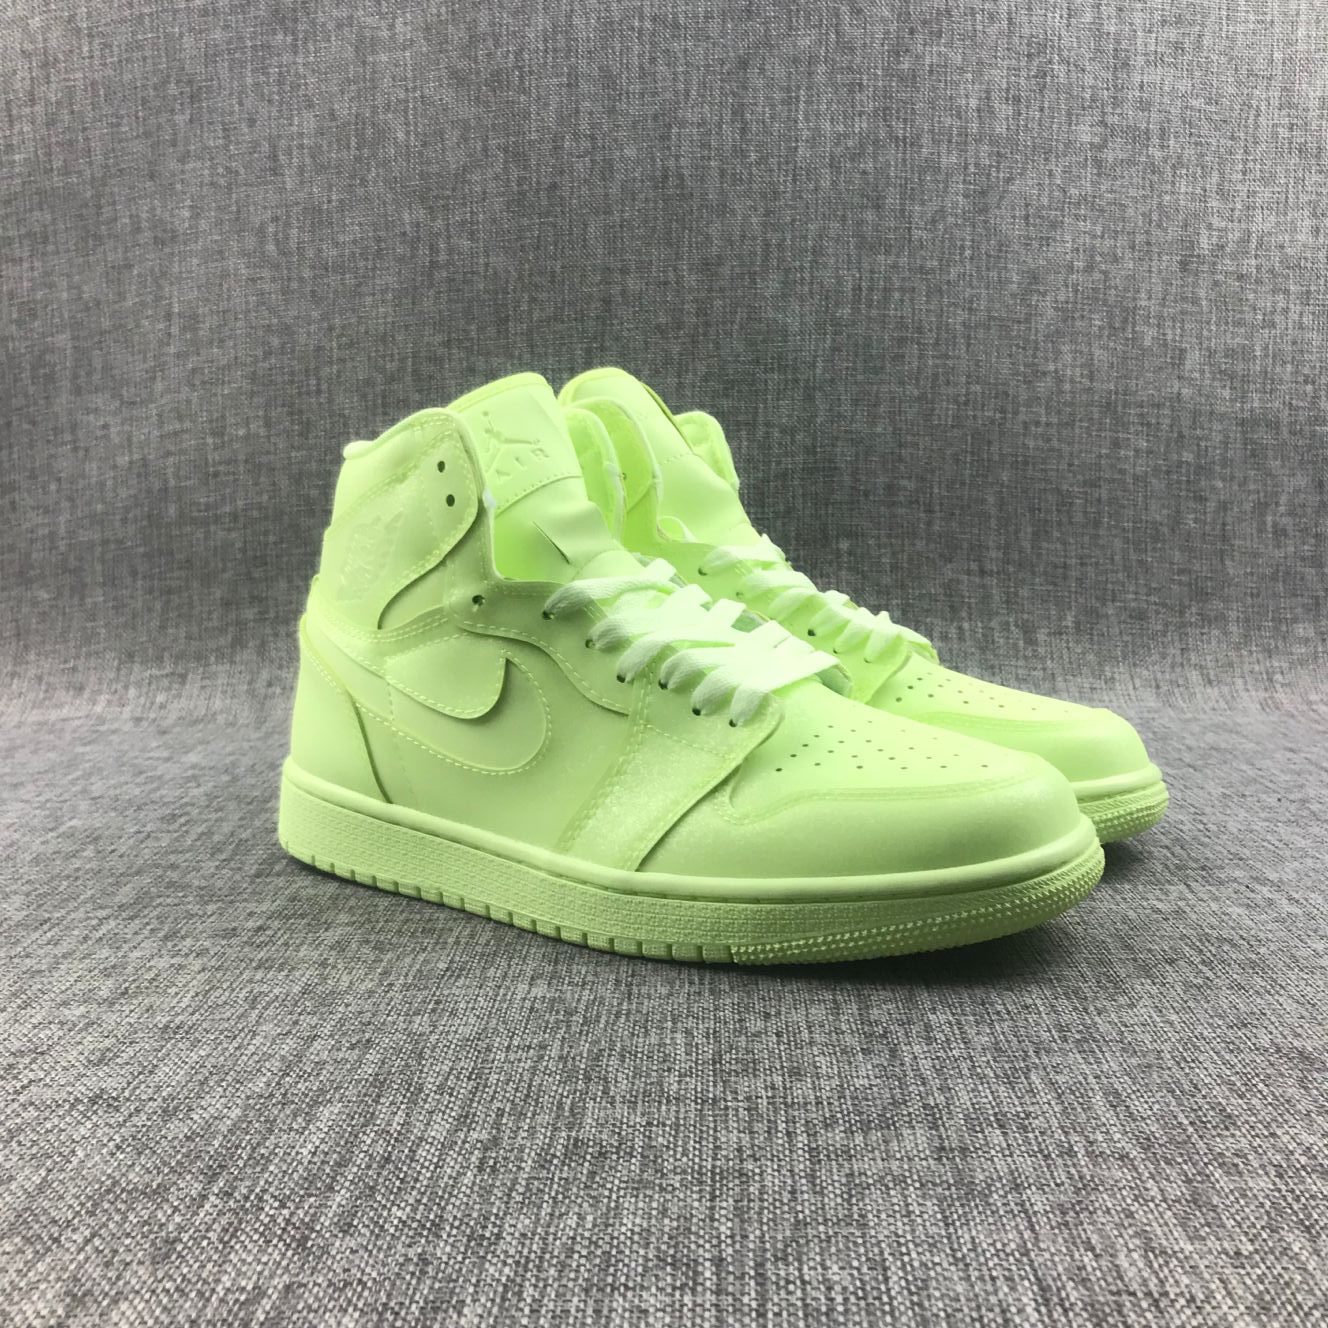 New Air Jordan 1 Mid Fluorscent Green Shoes